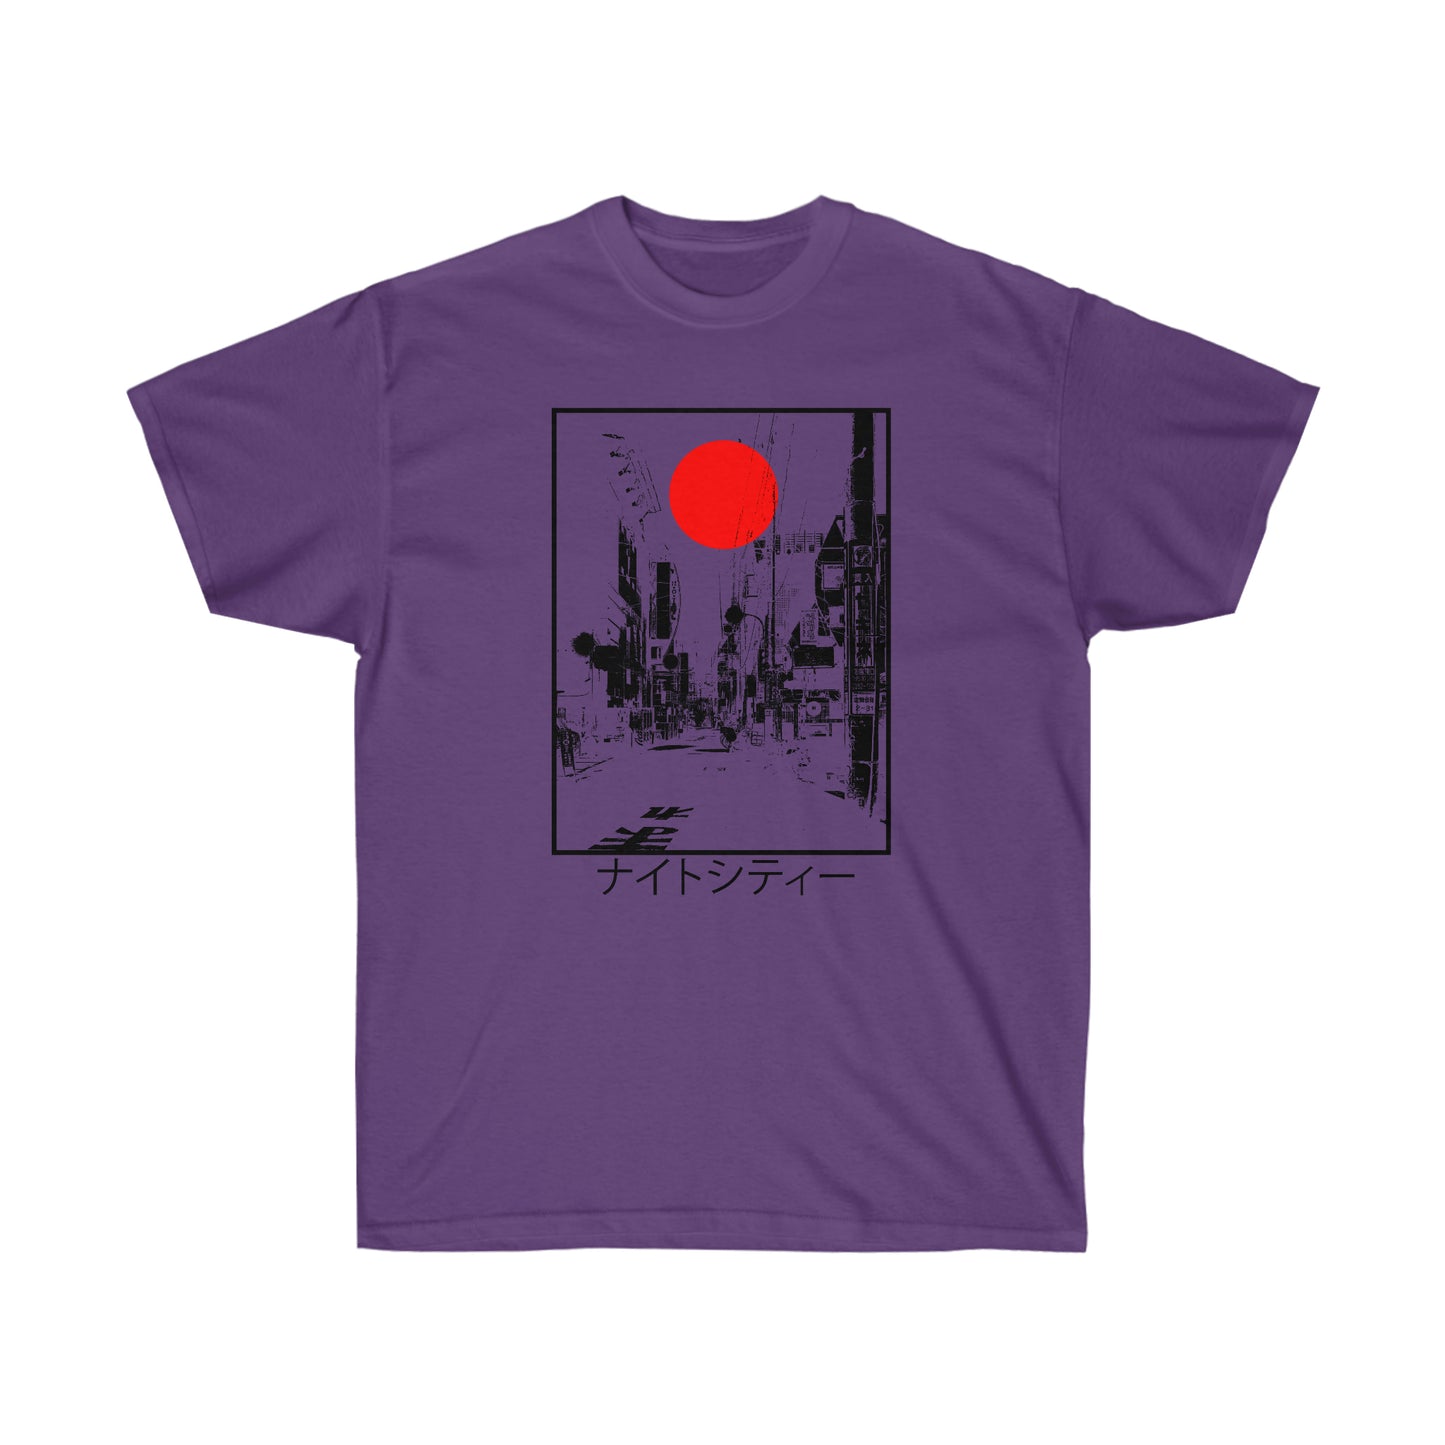 Japanese Street T-Shirt Japanese Aesthetic, vapor wave shirt Pastel Synthwave tee, Japan Street Wear Grunge Clothing Retrofuturism